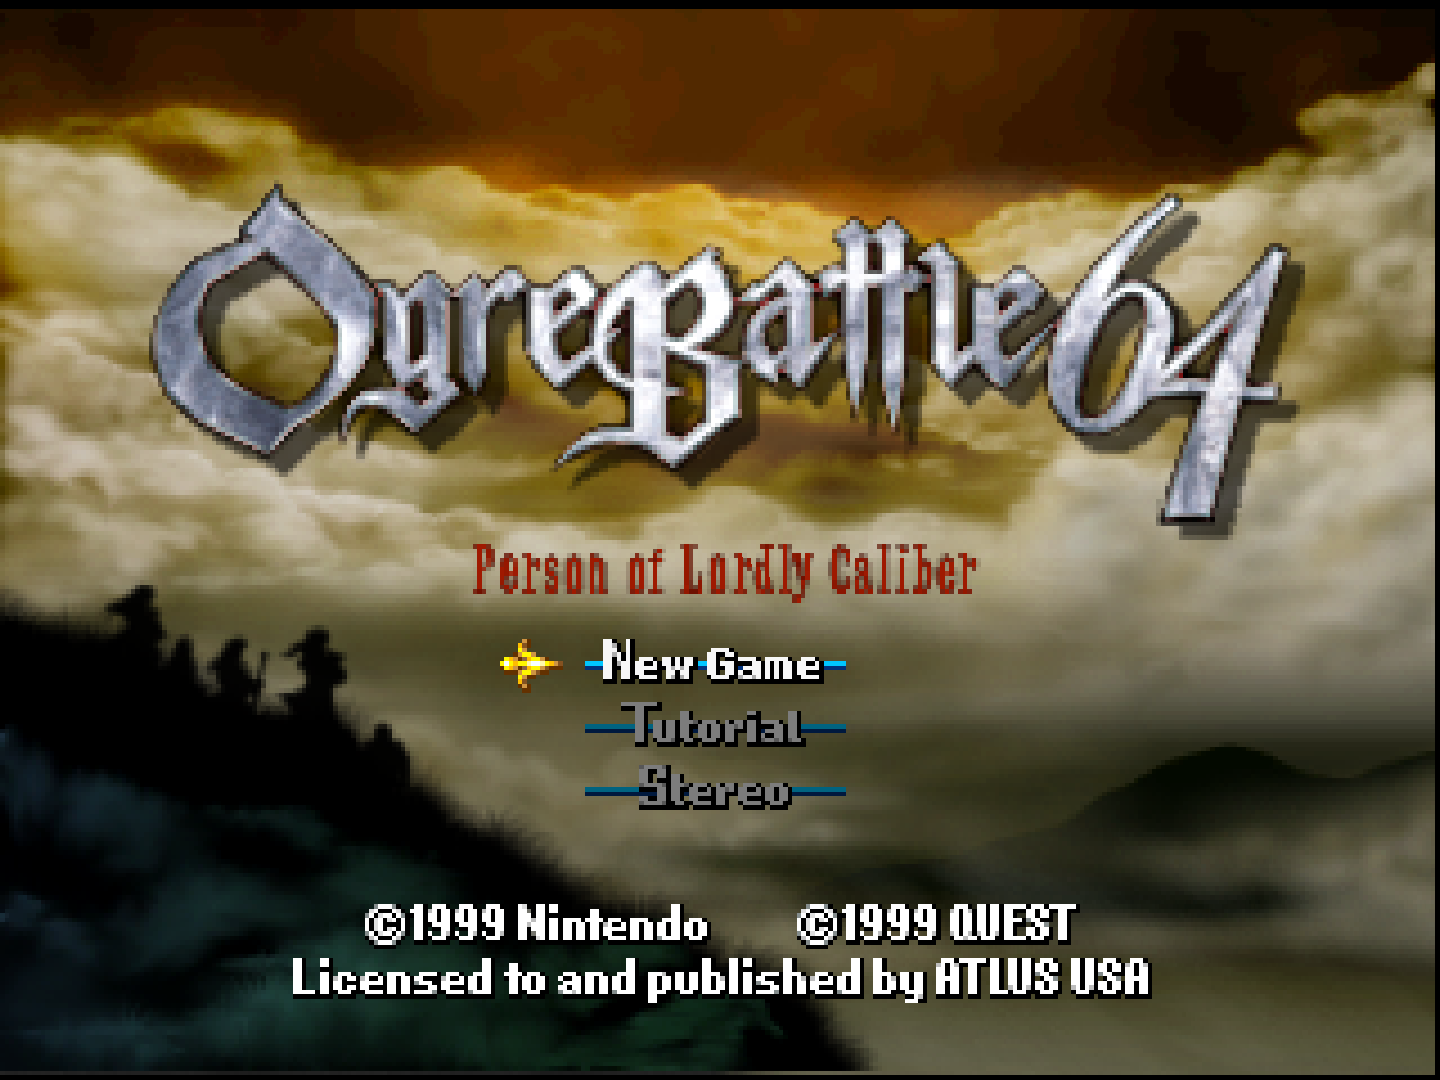 Ogre battle. Ogre Battle 64 - person of Lordly Caliber Nintendo 64. 13. Ogre Battle 64: person of Lordly Caliber. Ogre Battle 64 - person of Lordly Caliber (USA).